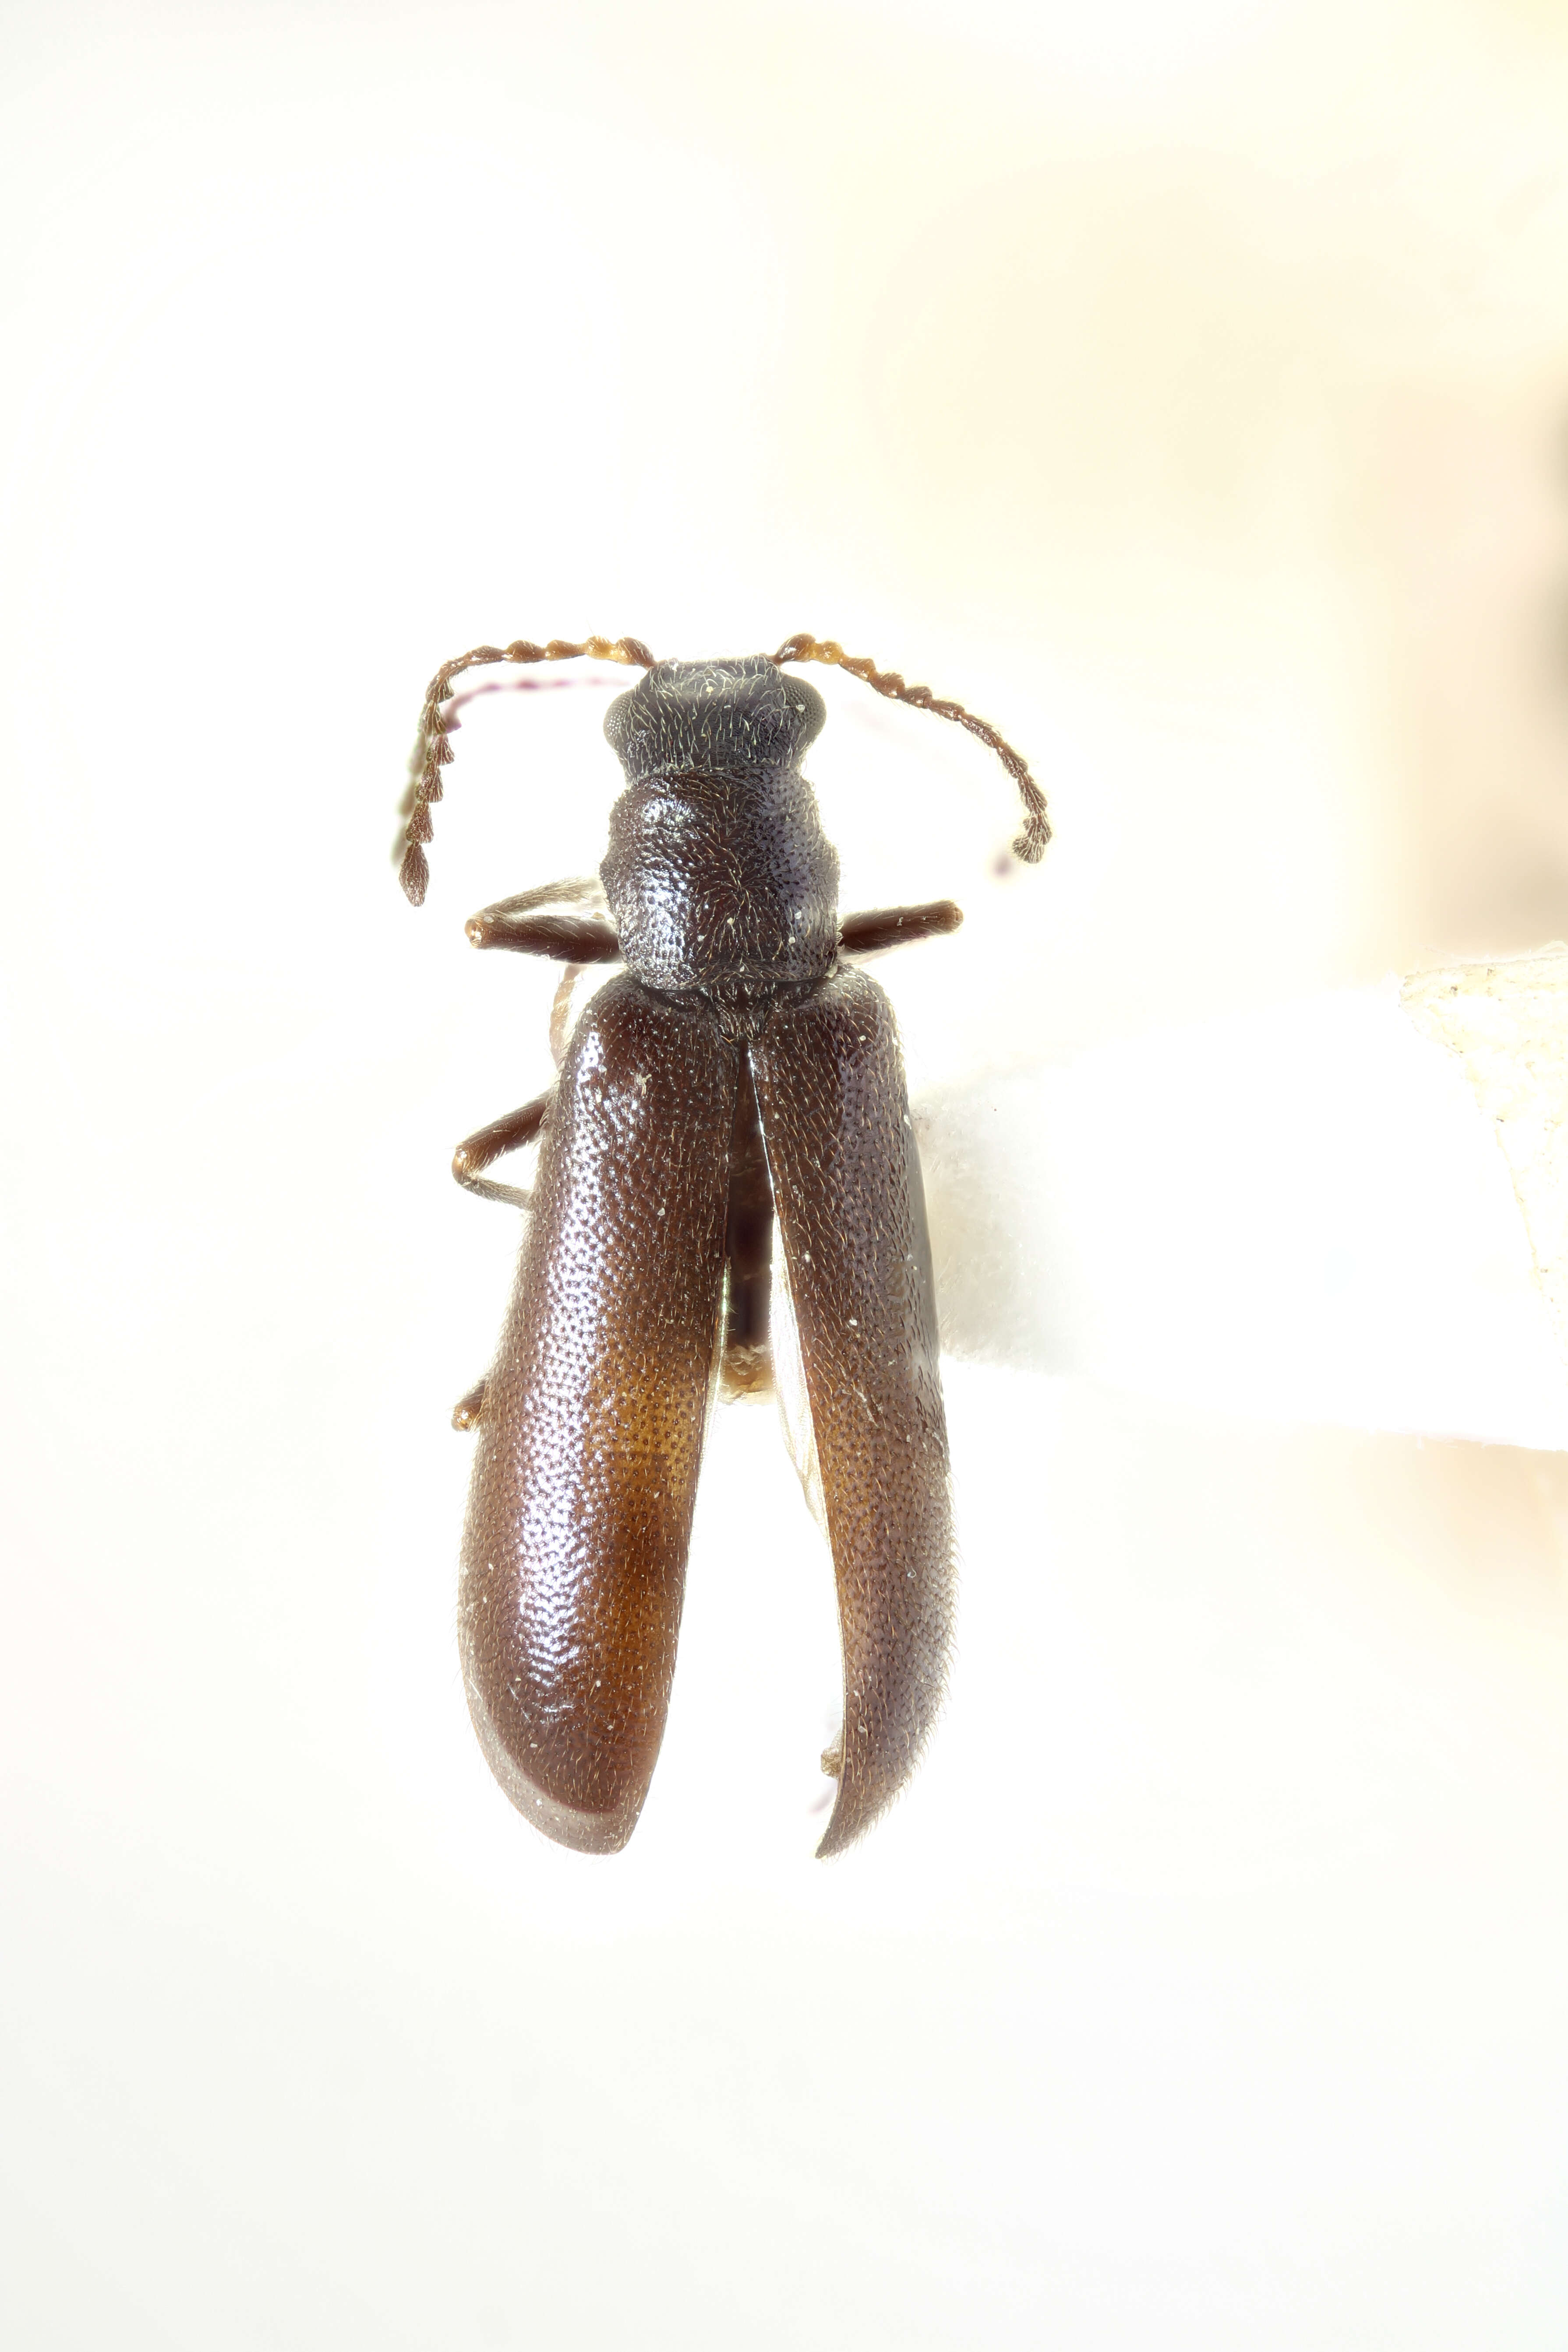 Image of soft-winged flower beetles